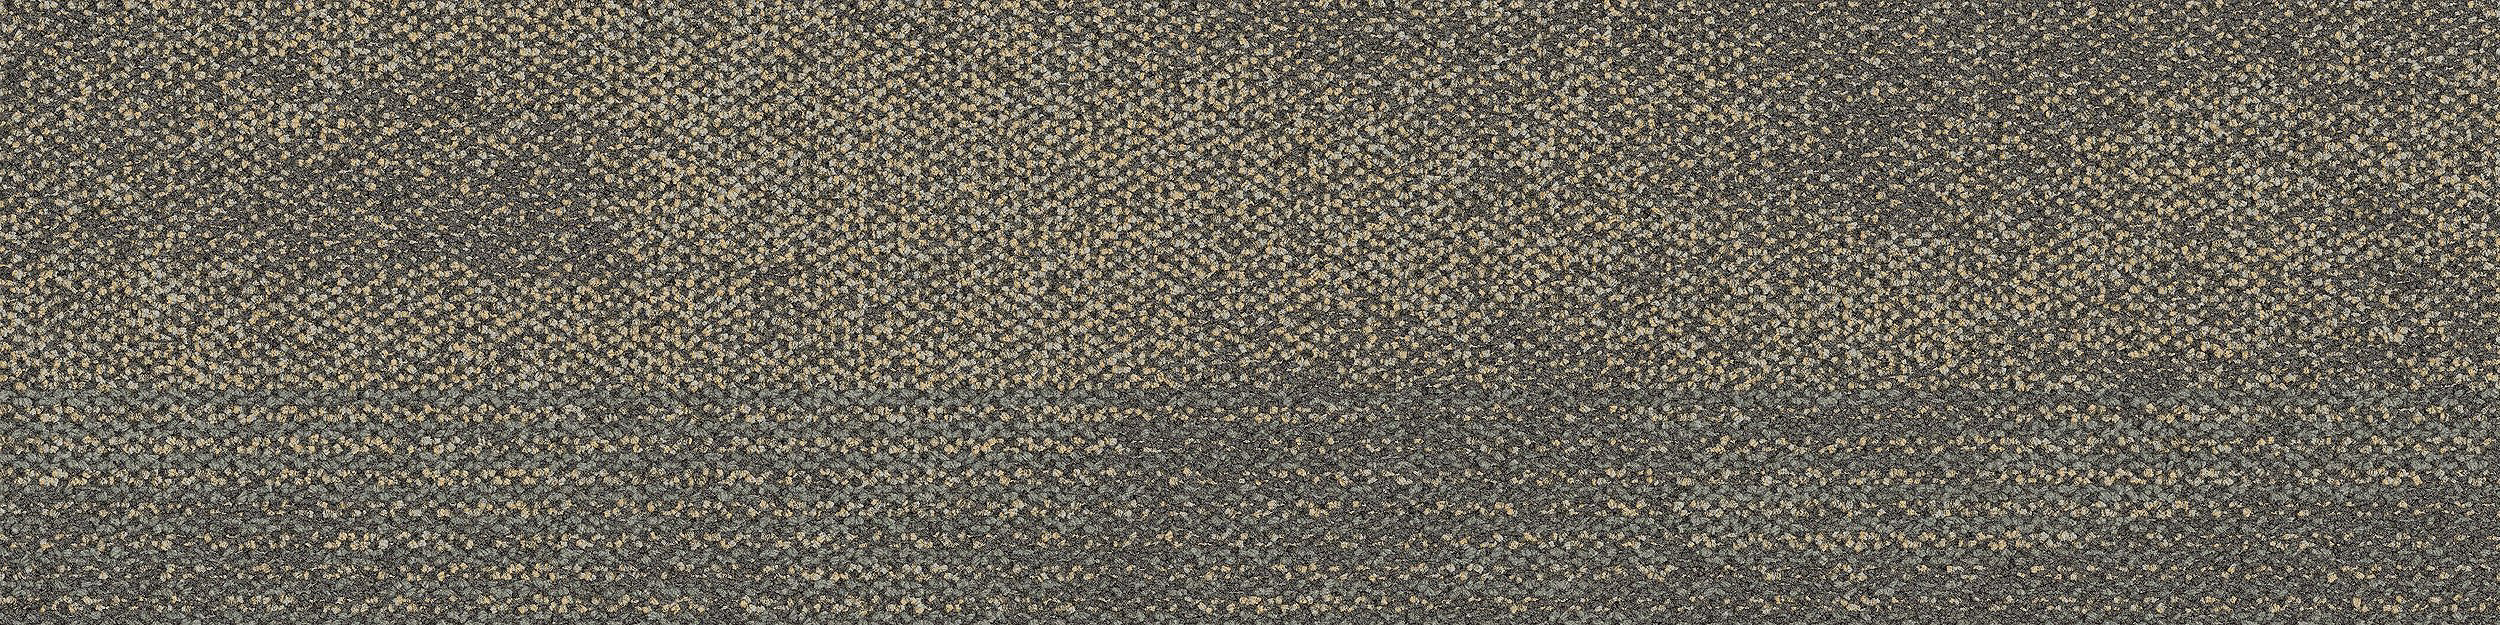 Neighborhood Smooth Carpet Tile In Greige/Smooth image number 10